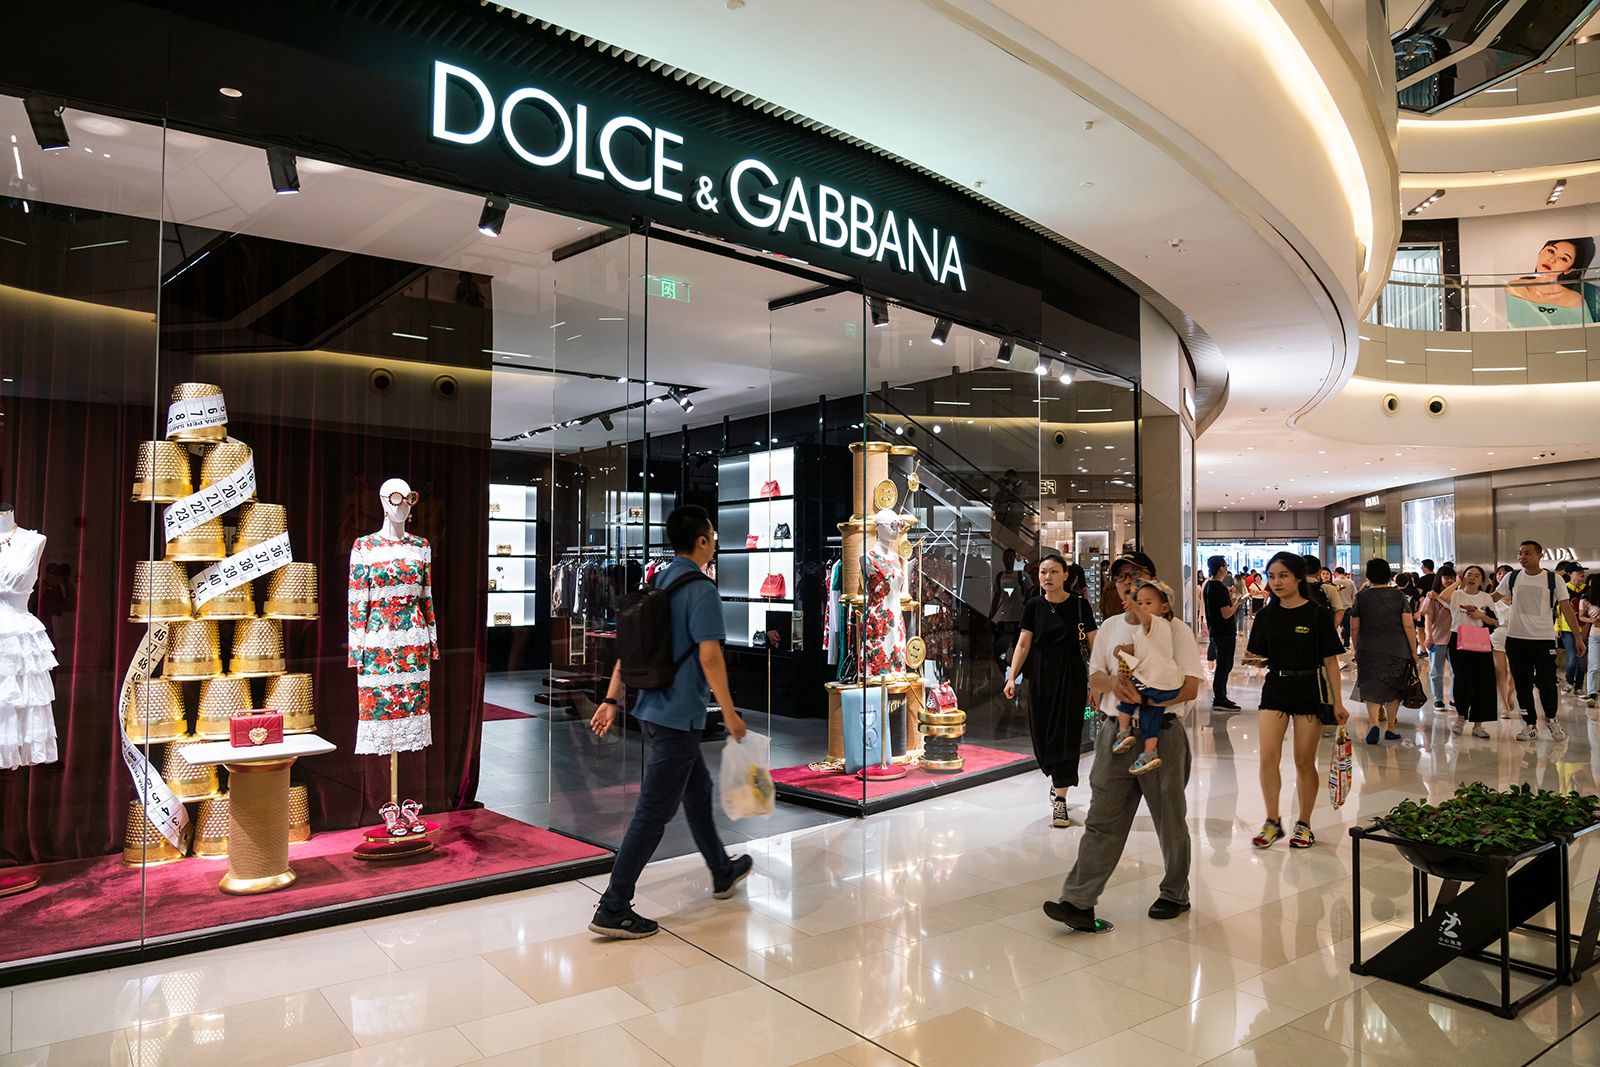 The Dolce & Gabbana Karen Mok shows label is still struggling to win back China - CNN Style